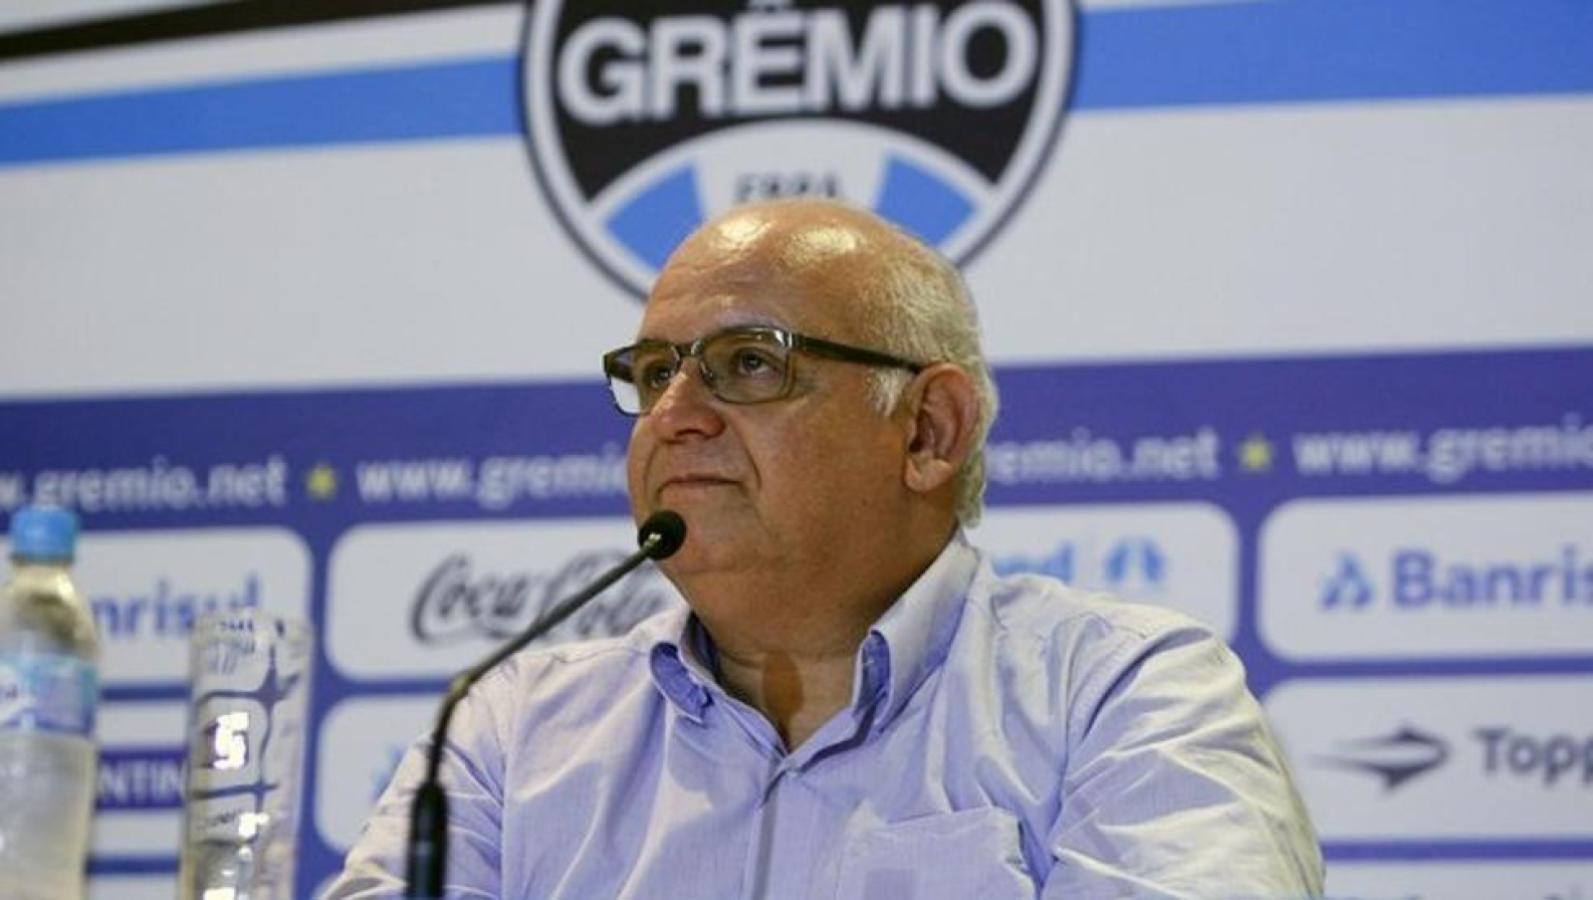 Imagen Romildo Bolzan, presidente del Gremio de Porto Alegre, asegura tener el "si" del delantero.